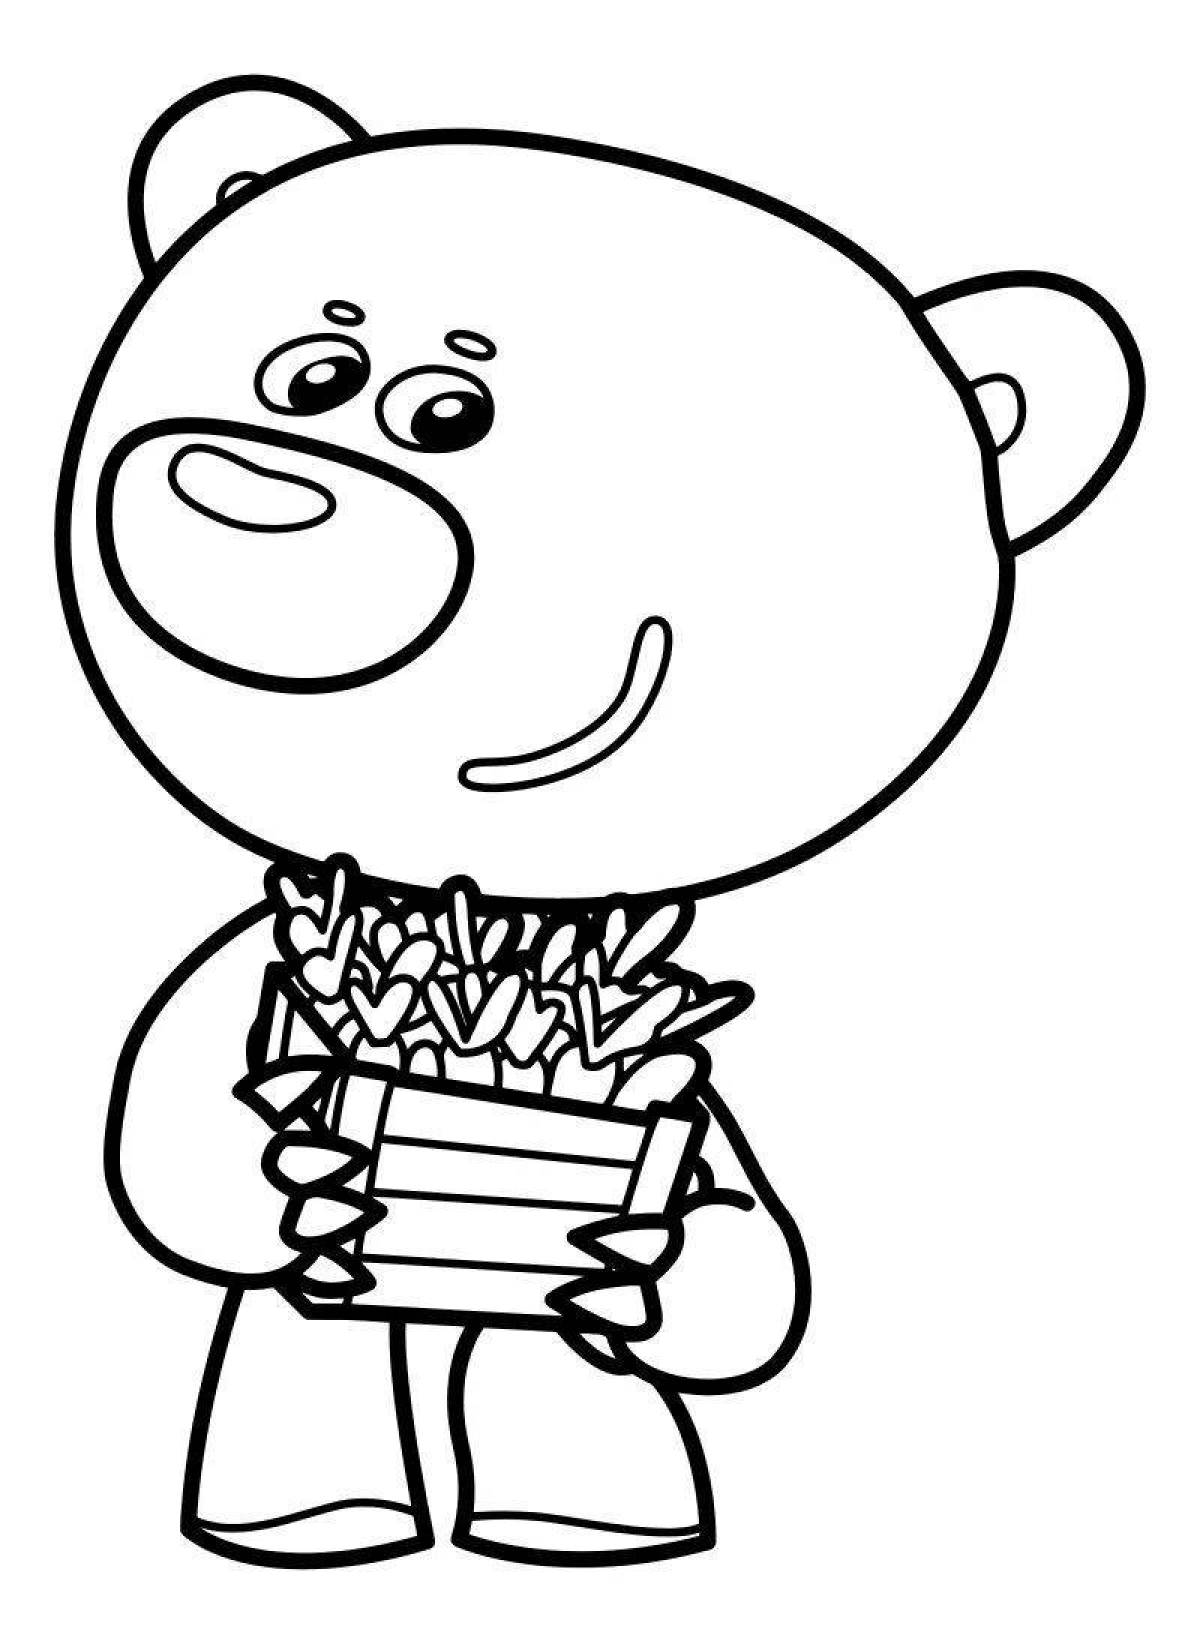 Adorable bear cloud coloring book